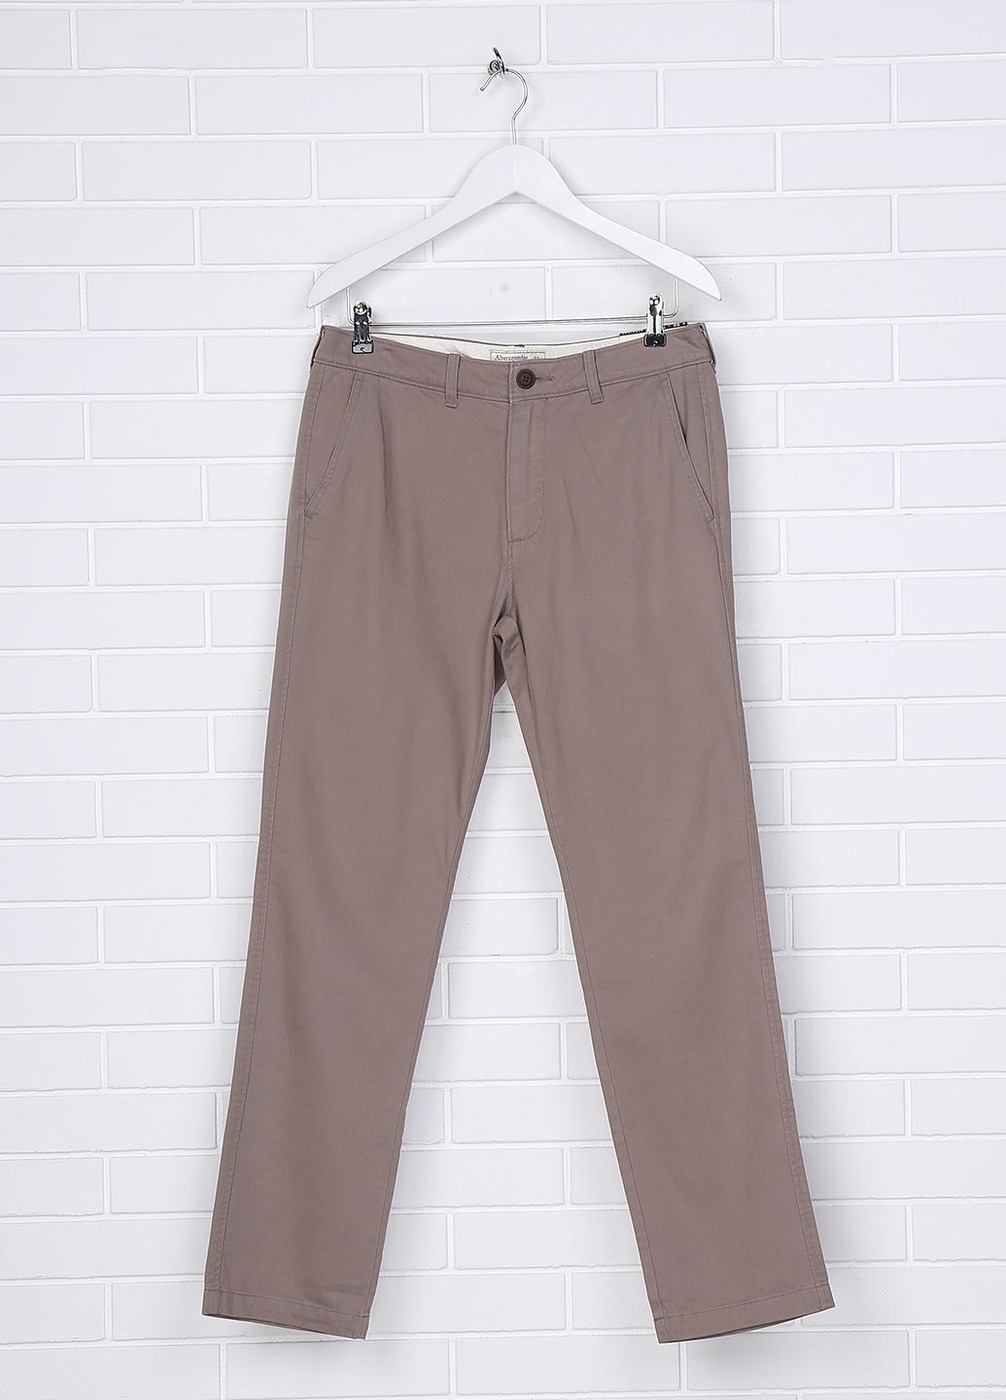 Брюки мужские - брюки Slim Straight Abercrombie & Fitch, W31L32, W31L32